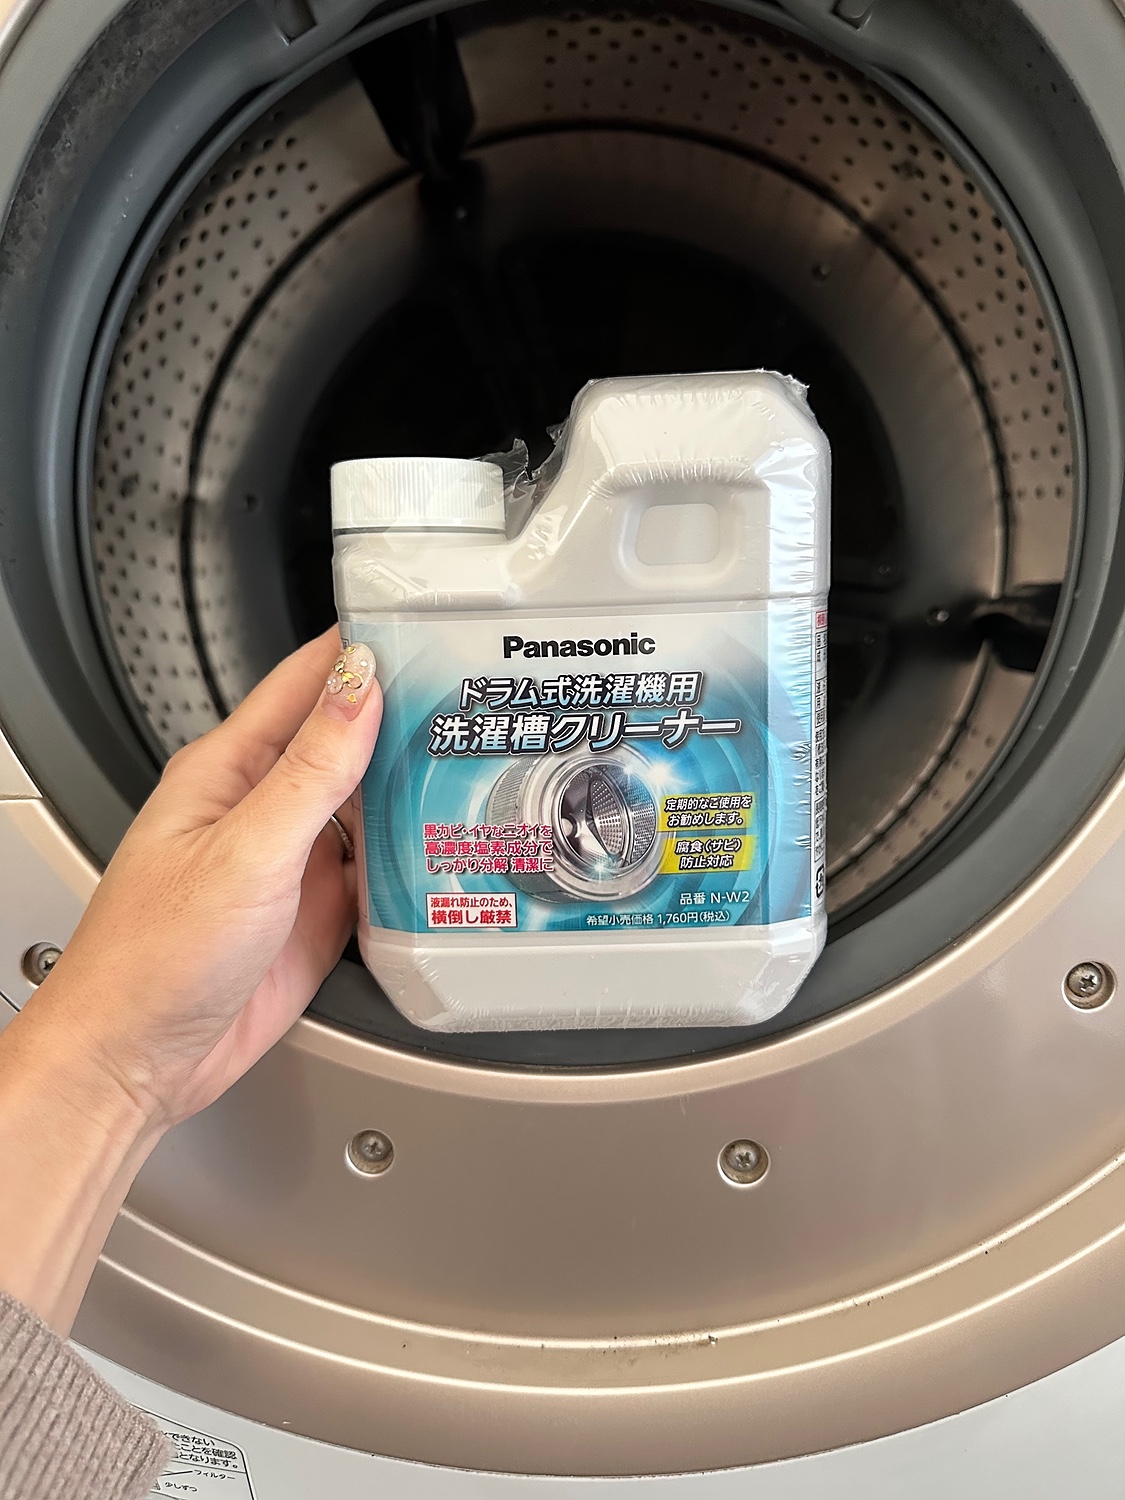 【手頃価格】美品Panasonicドラム式洗濯機9.0kg送料無料 洗濯機